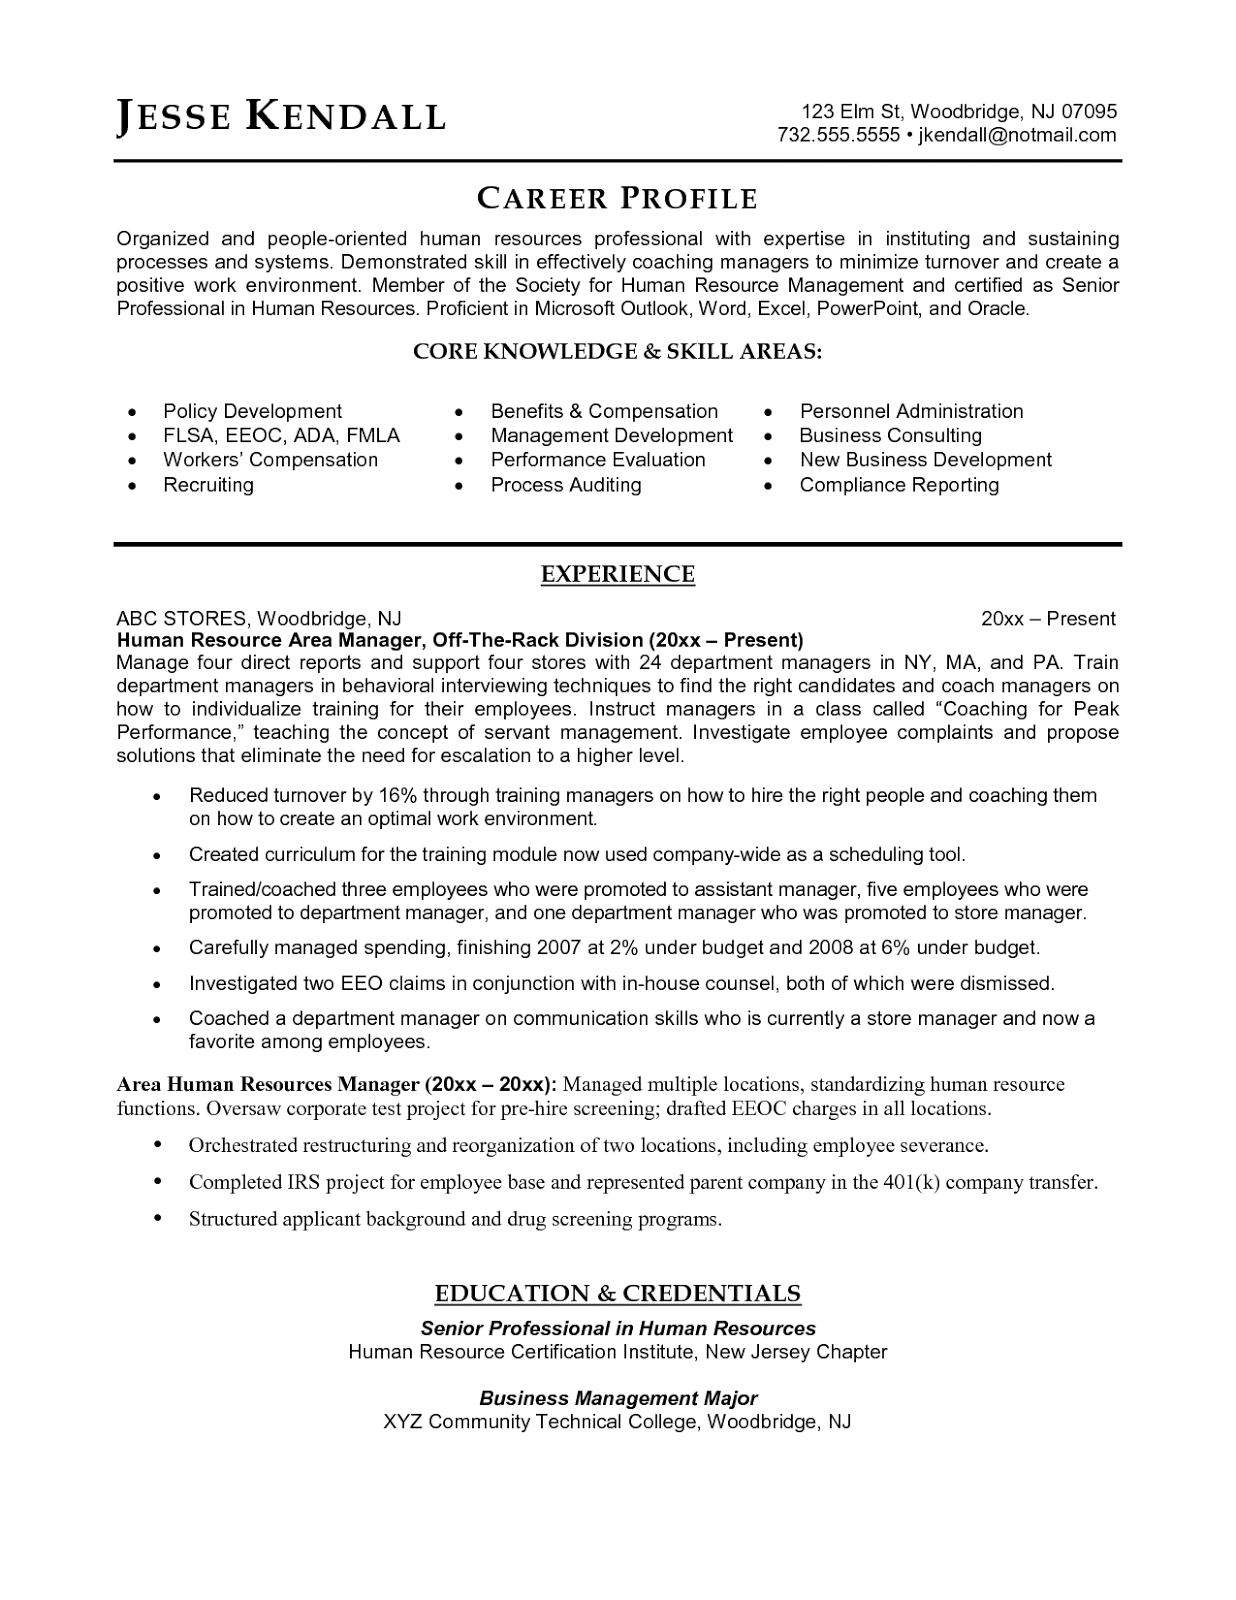 Human resources job resume template